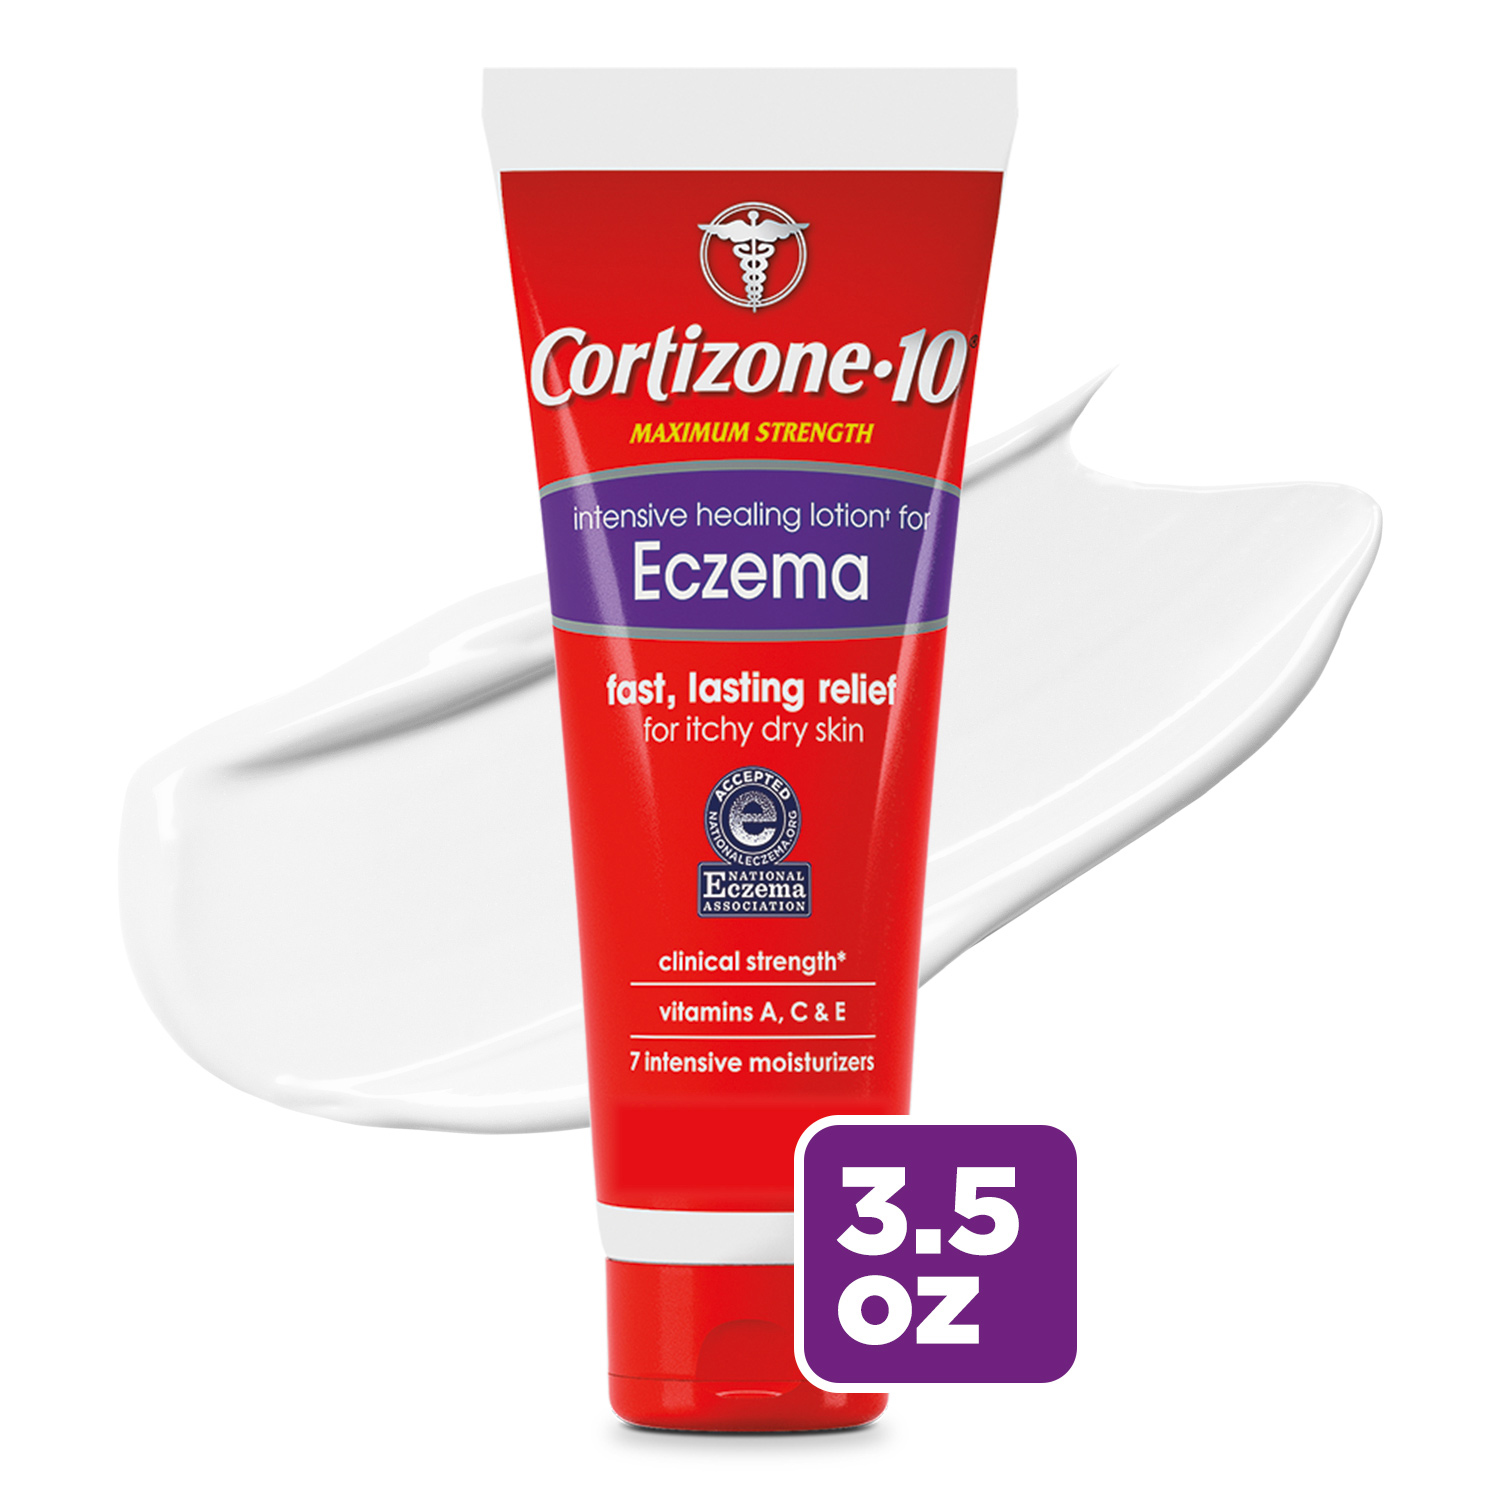 Cortizone-10 1% Hydrocortisone Anti Itch Cream for Eczema and Bug Bite Relief, Maximum Strength, 3.5 oz - image 1 of 9